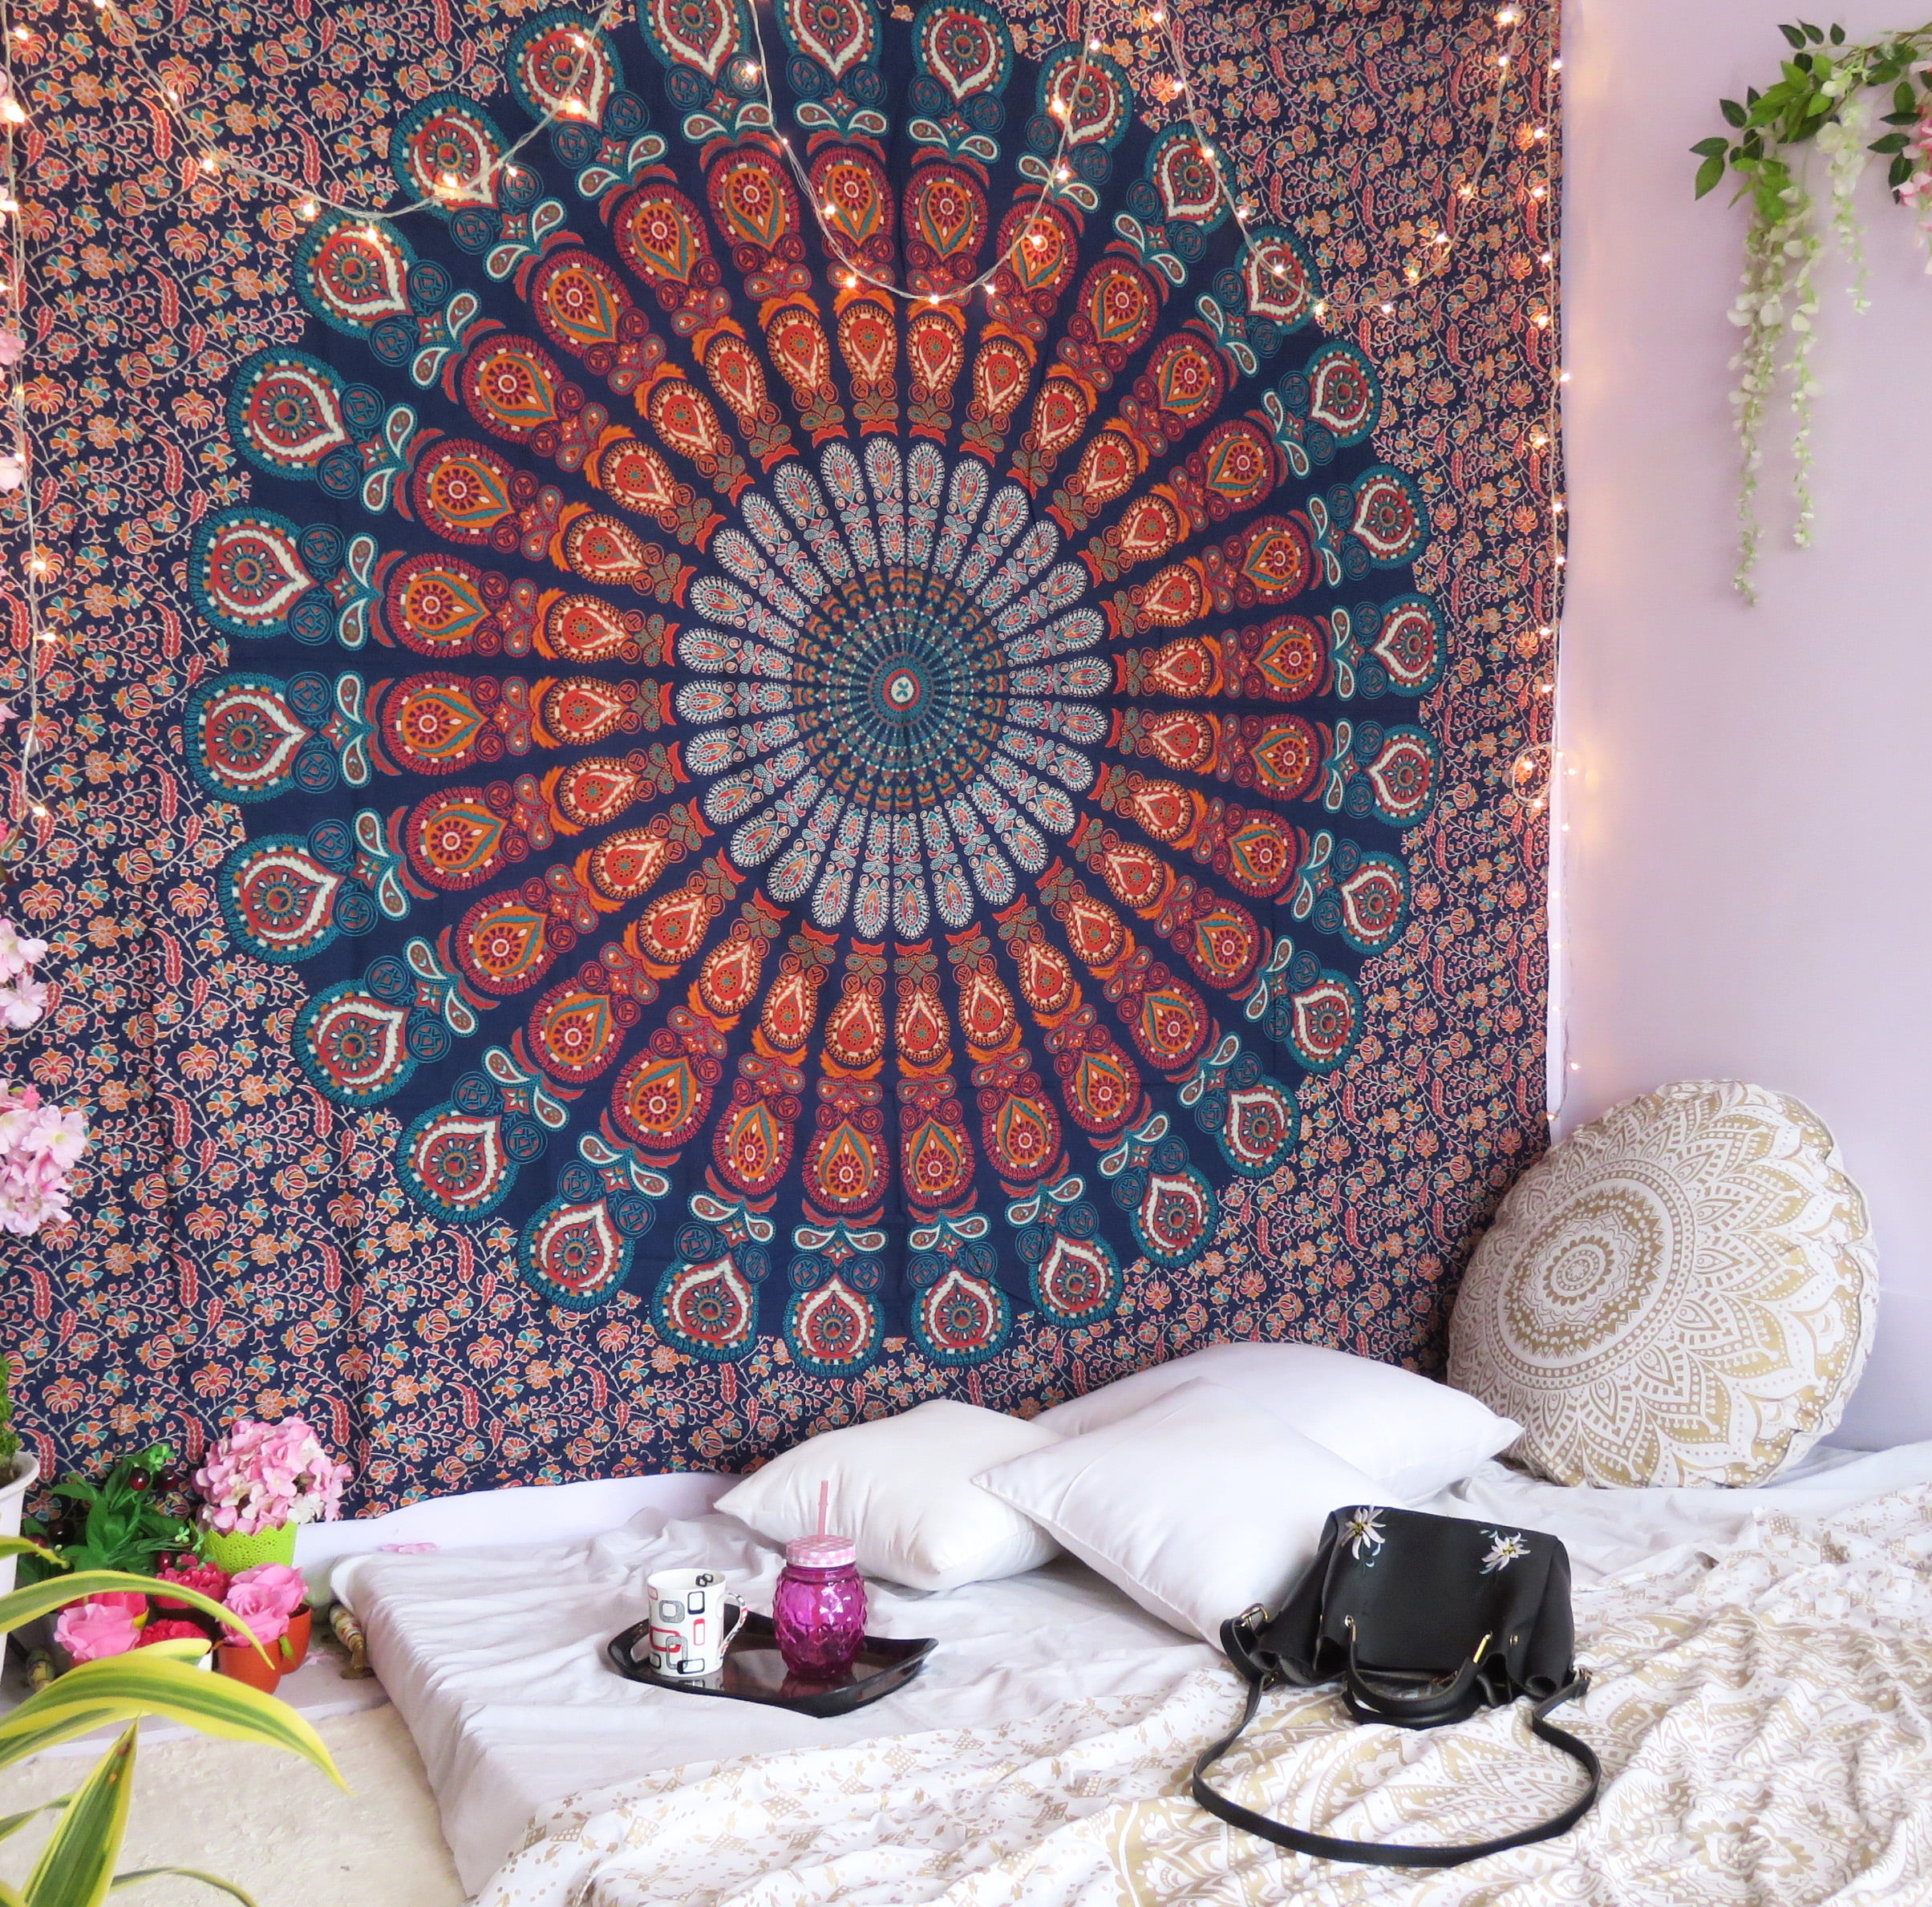 Mandala Tapestry Bohemian Tapestry Wall Hanging Blue Hippie Wall Tapestry Home Decor Beach Throw Dorm Decor Bedspread 90x84